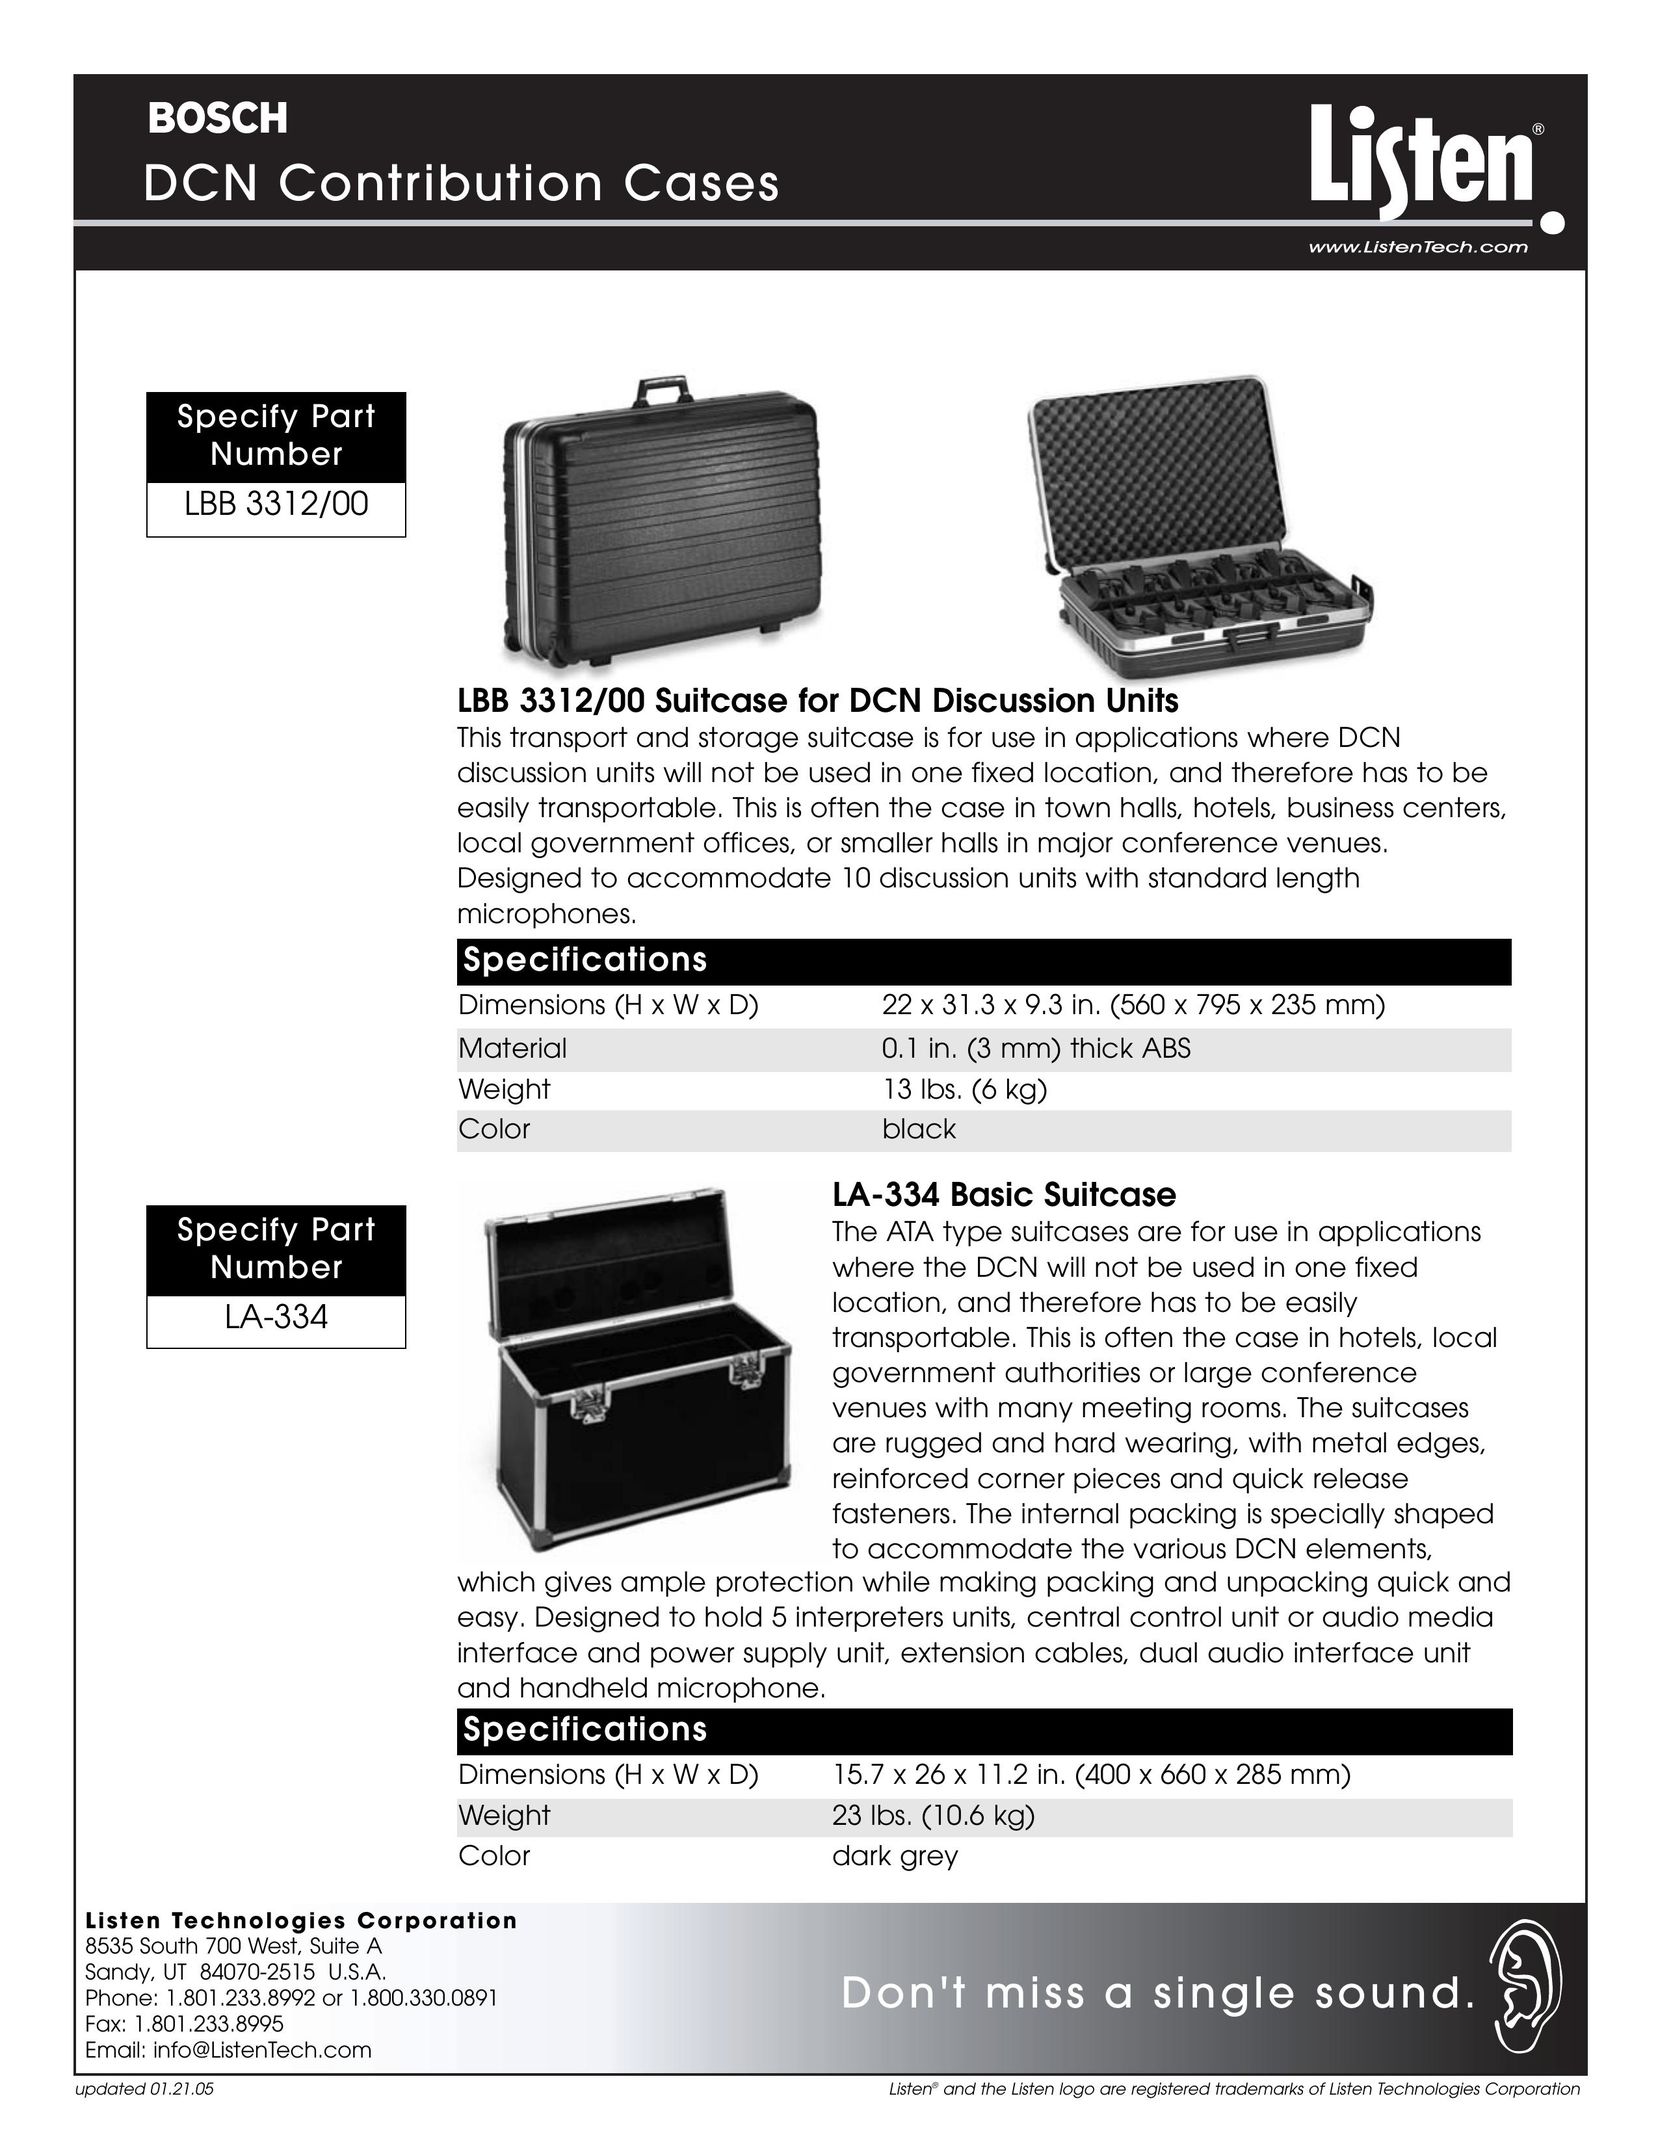 Listen Technologies LBB 3500 Carrying Case User Manual